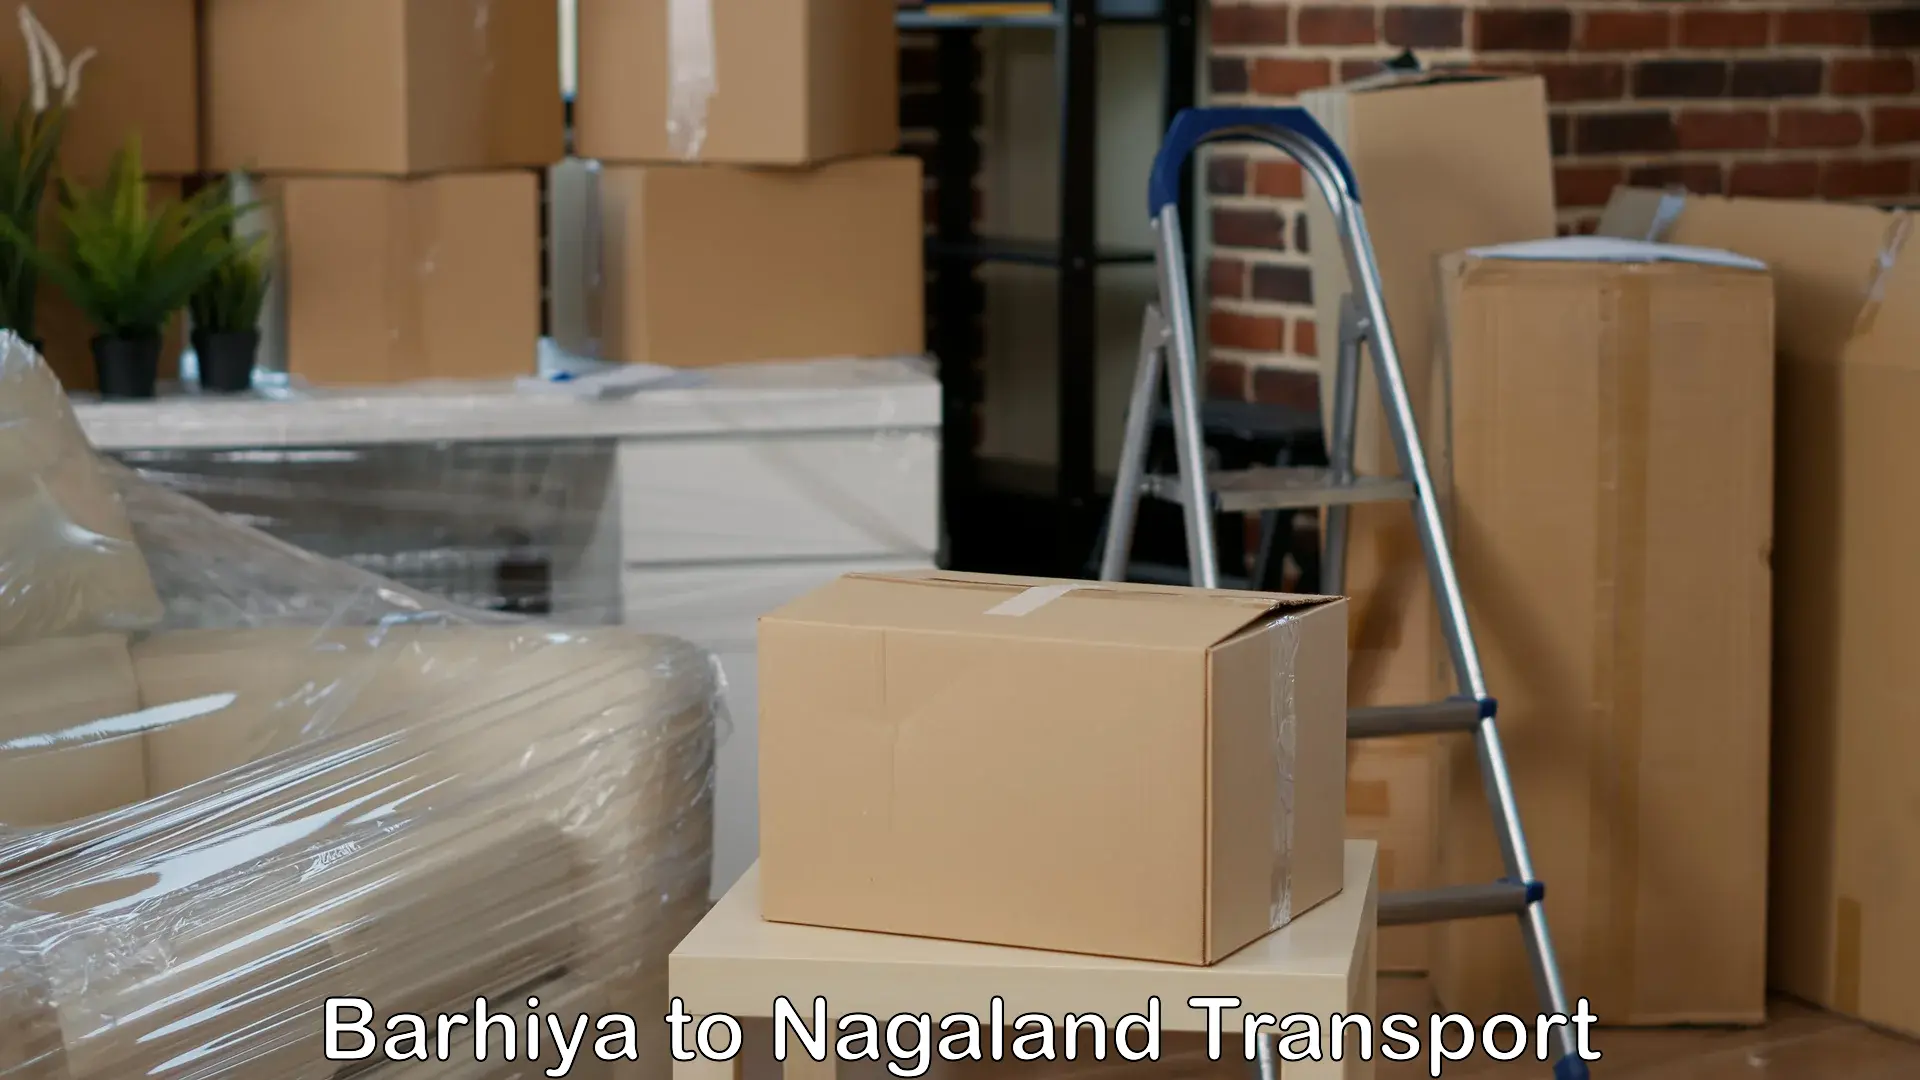 Nearby transport service Barhiya to Nagaland